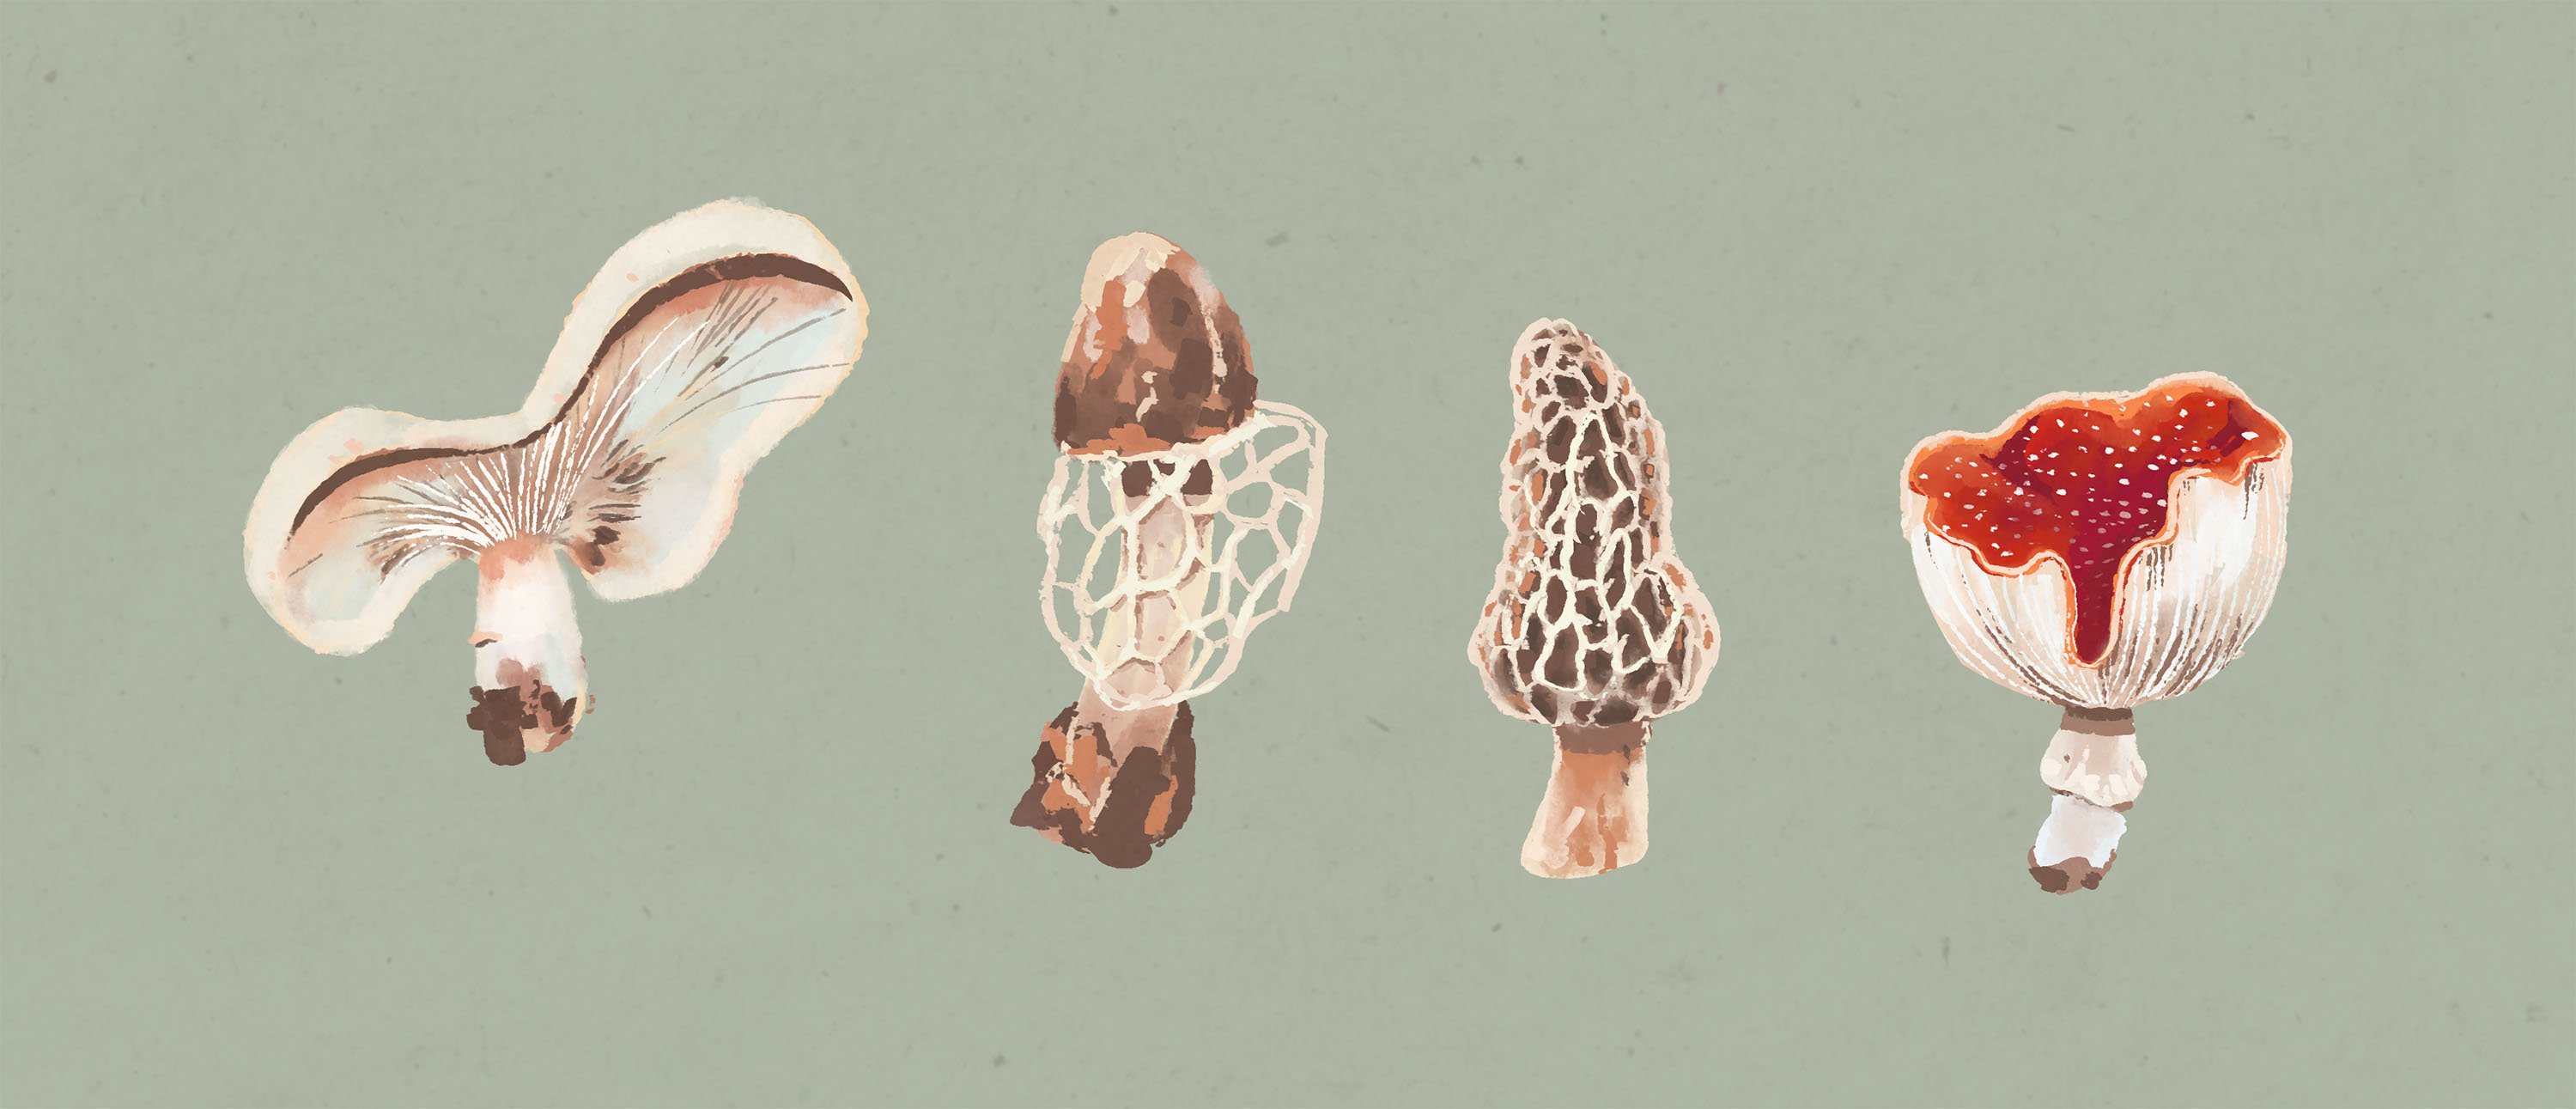 illustration of 4 mushrooms